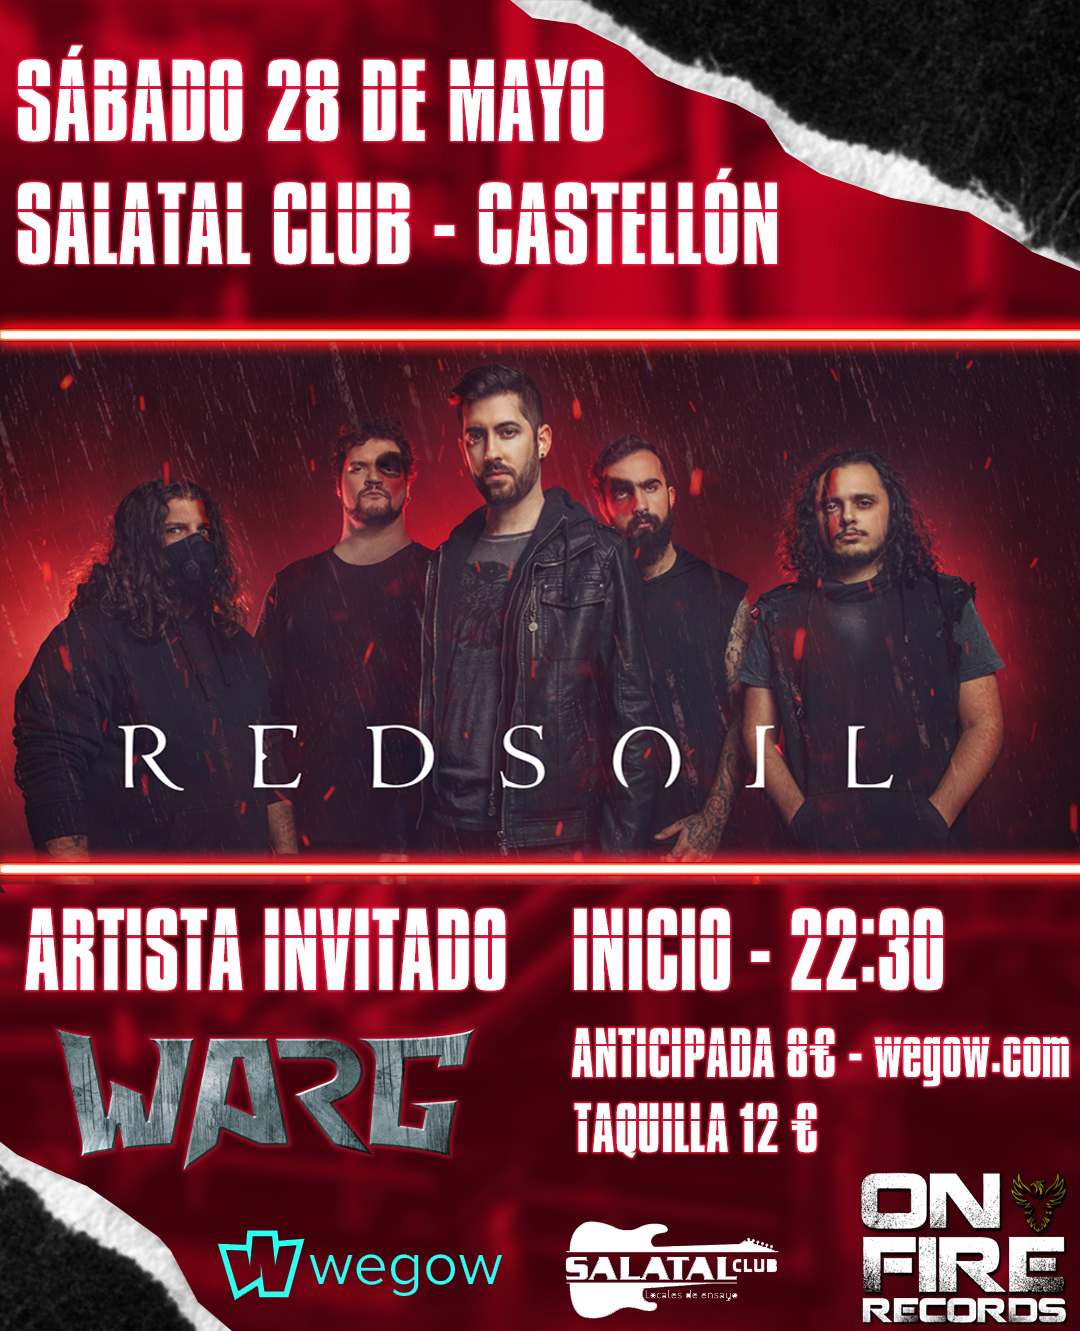 red soil warg salatal club castellon 16484869118743246